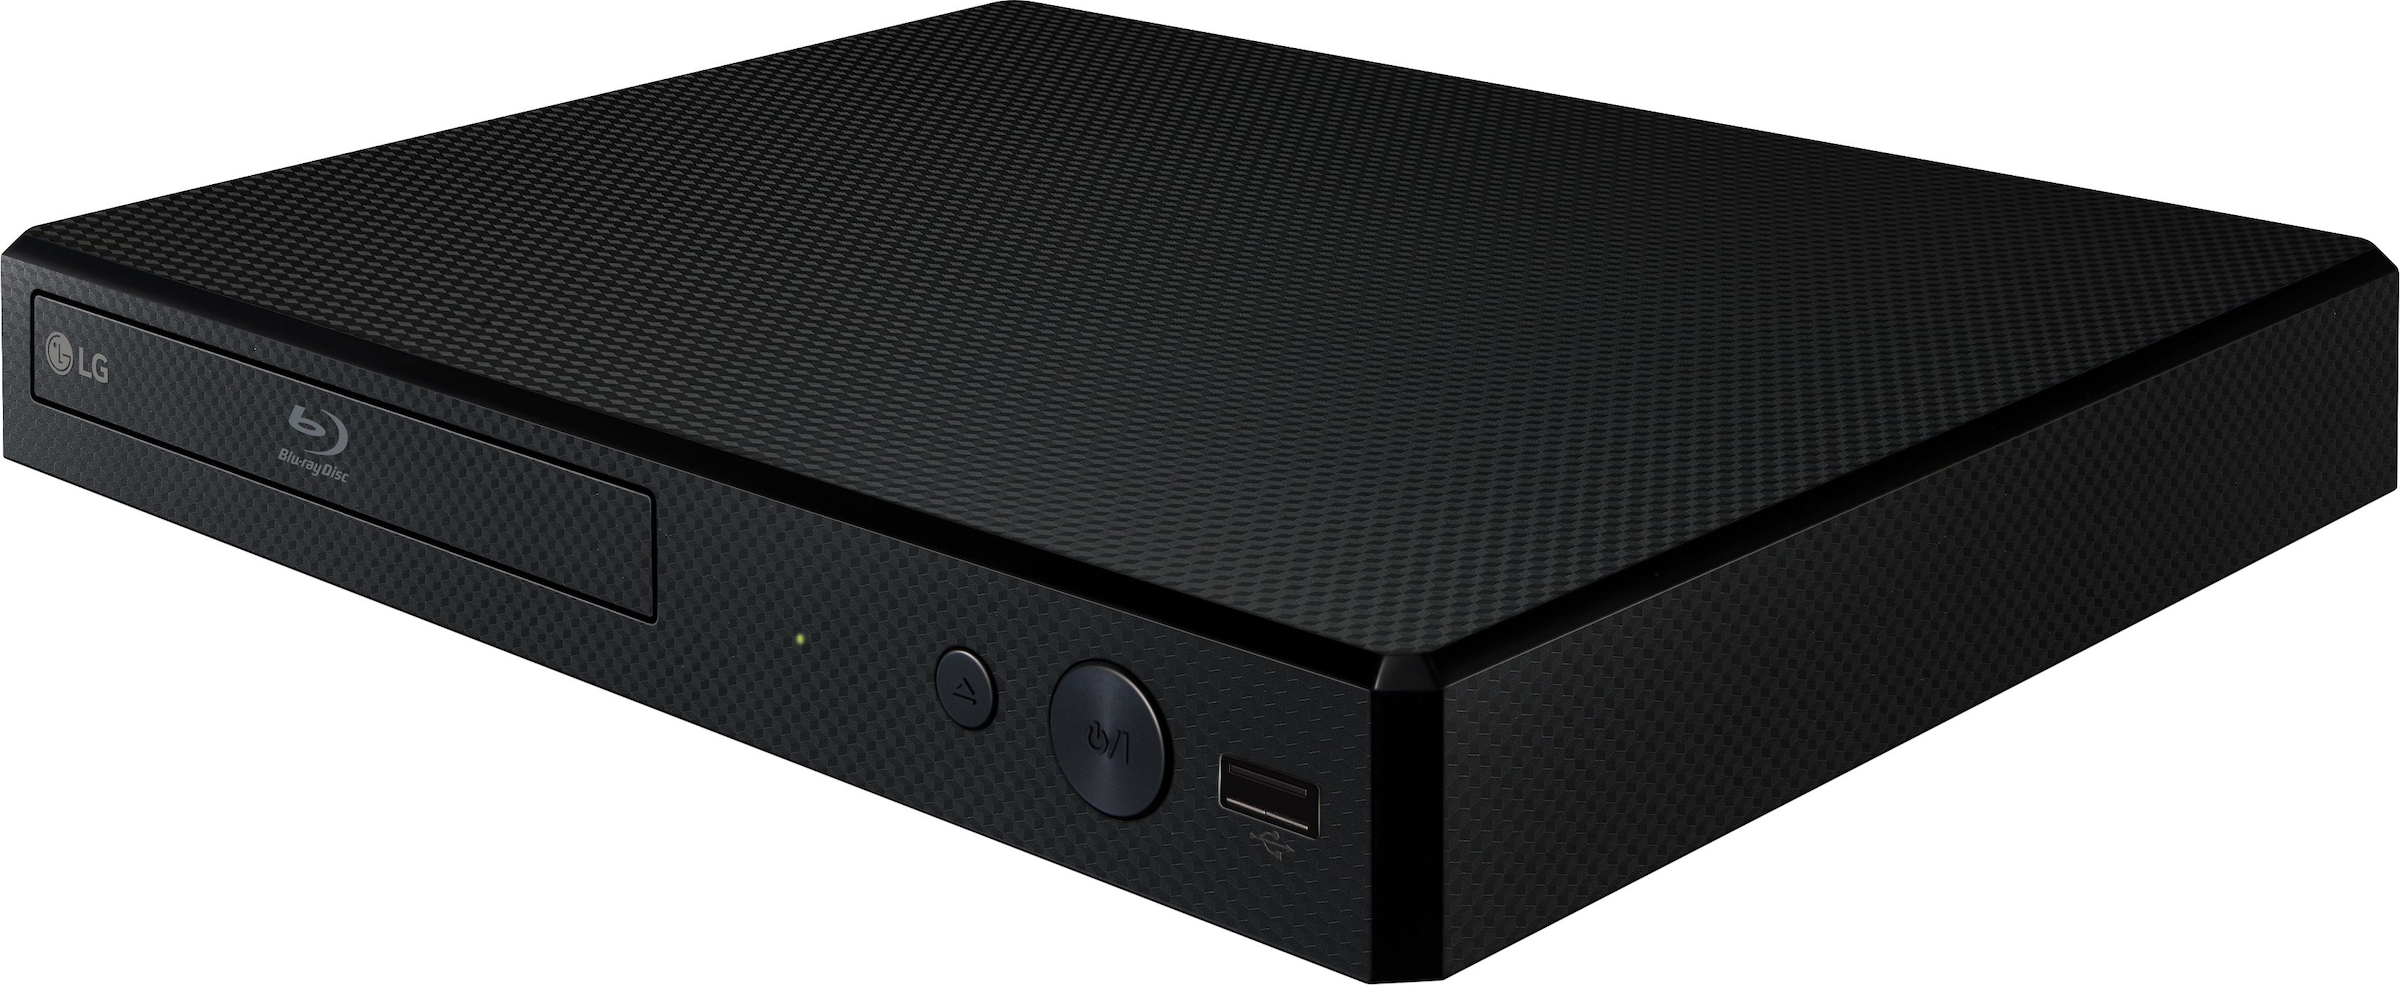 LG Blu-ray-Player »BP250«, Full HD Upscaling,HDMI und USB,kompatibel zu externer Festplatte